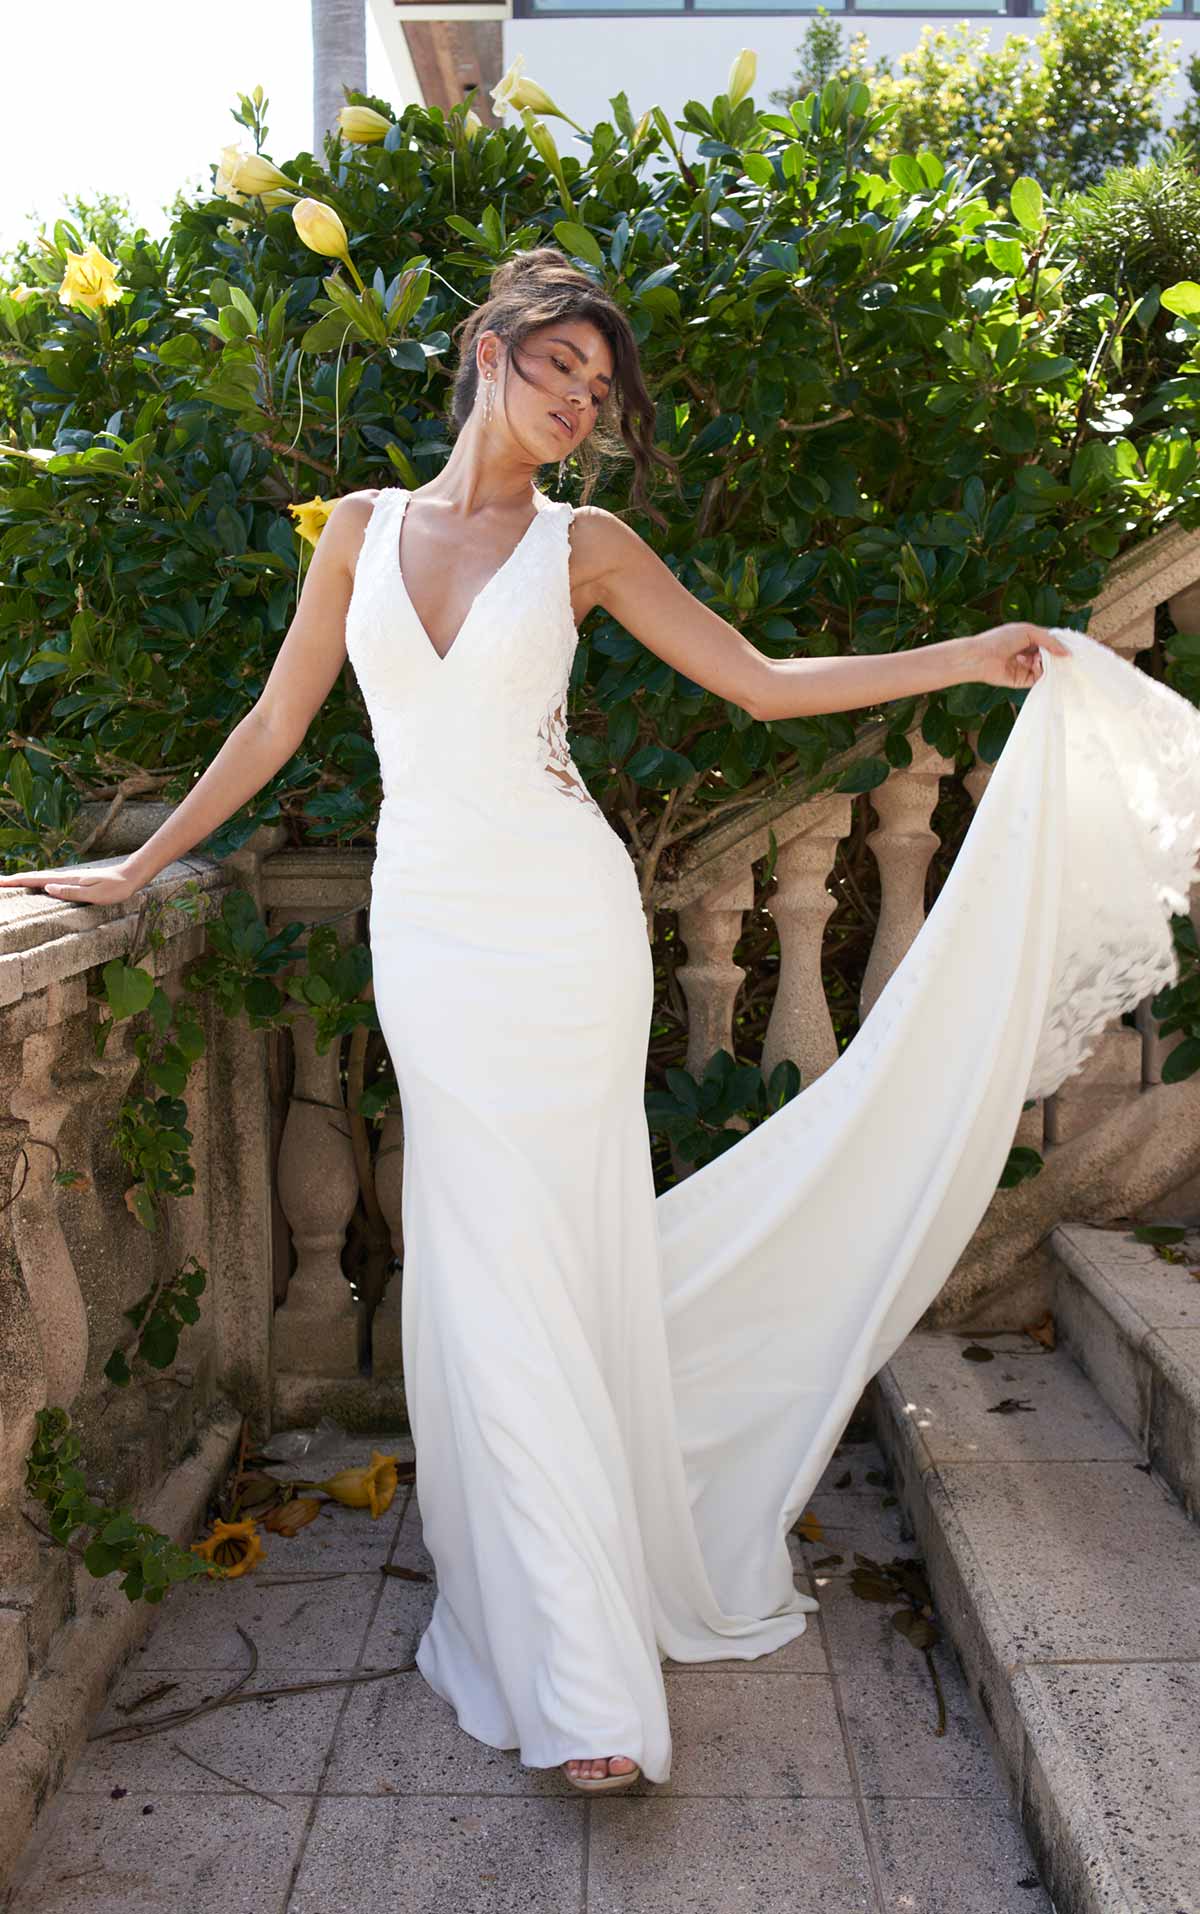 Love Wedding Dress: Simple long dress with a deep V neckline